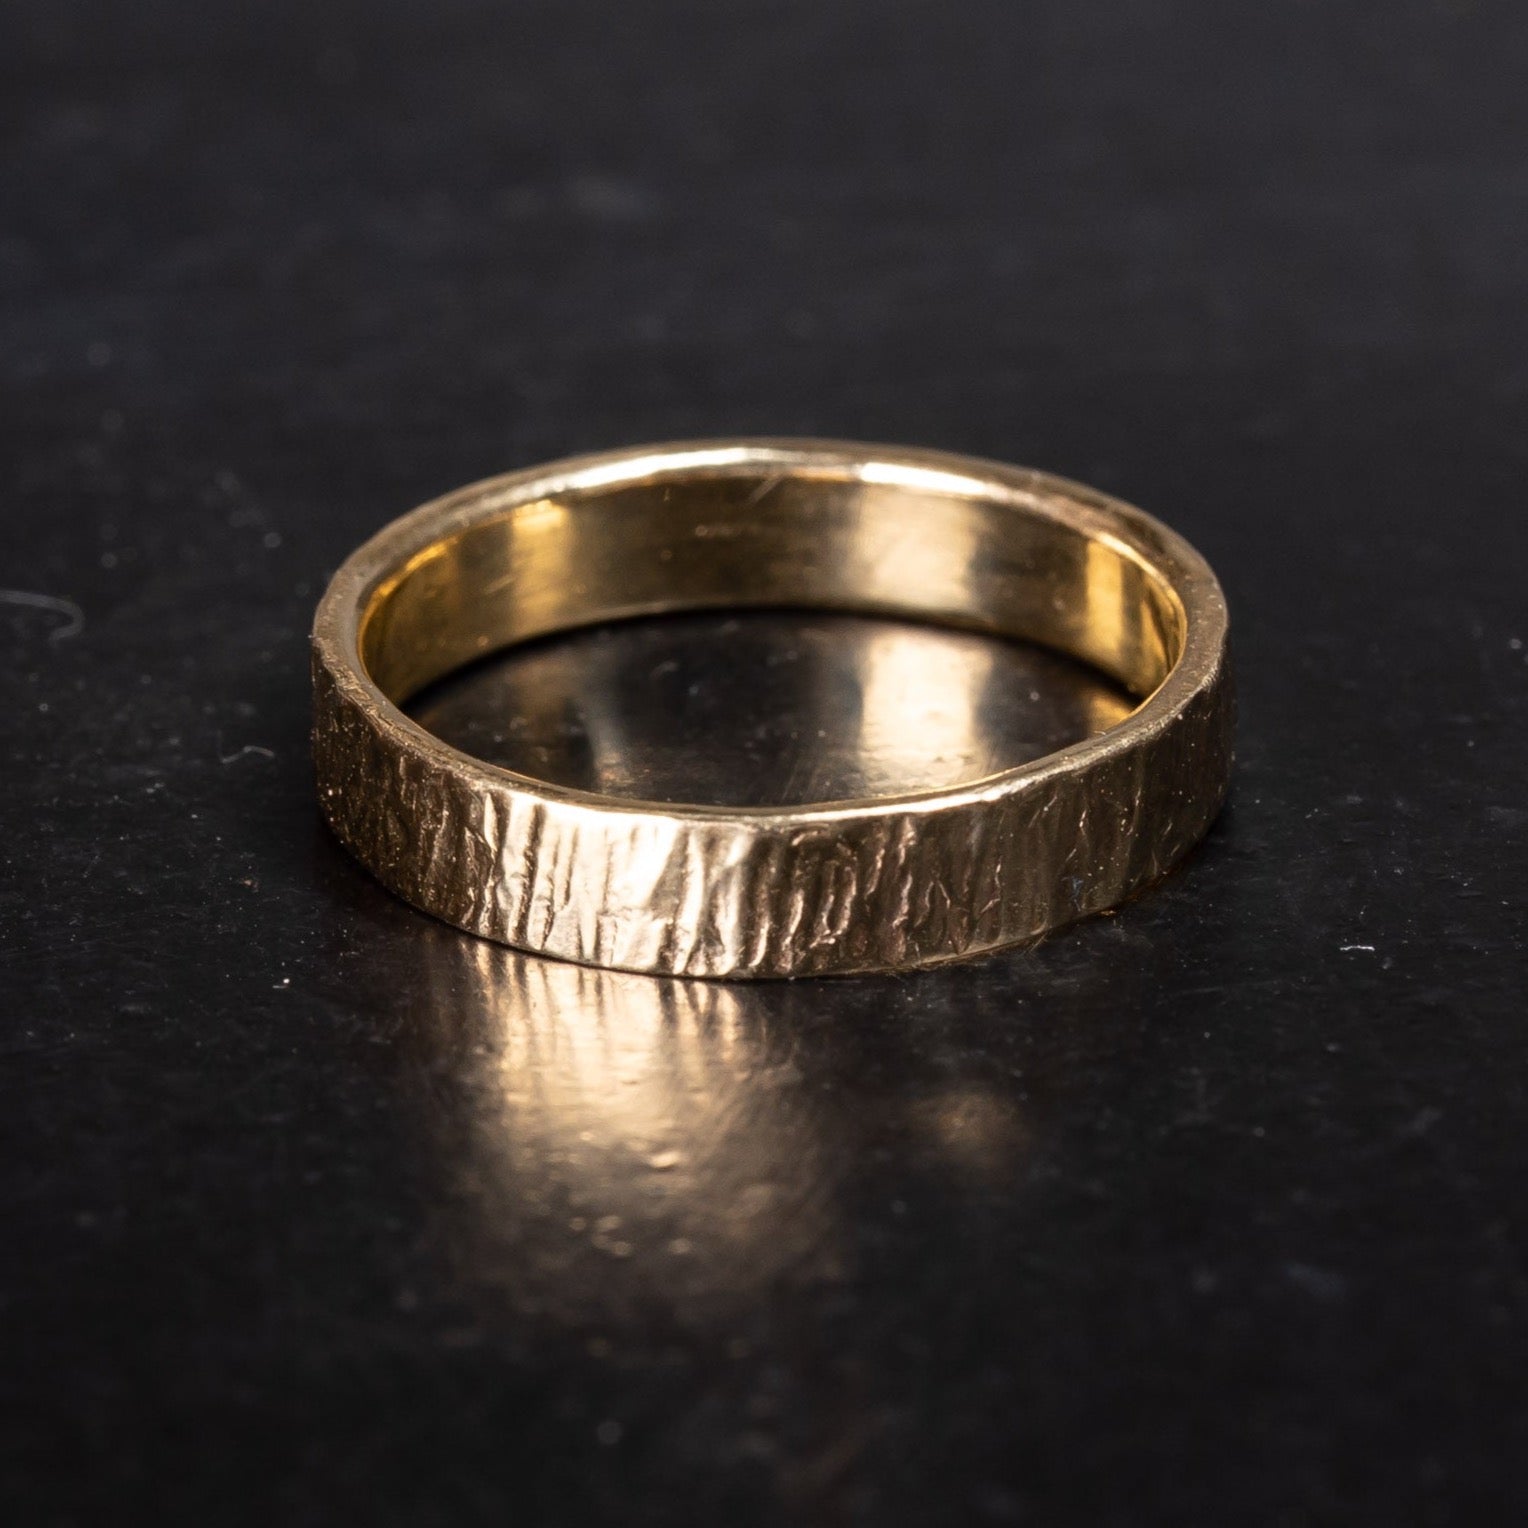 The Lena Wedding Ring